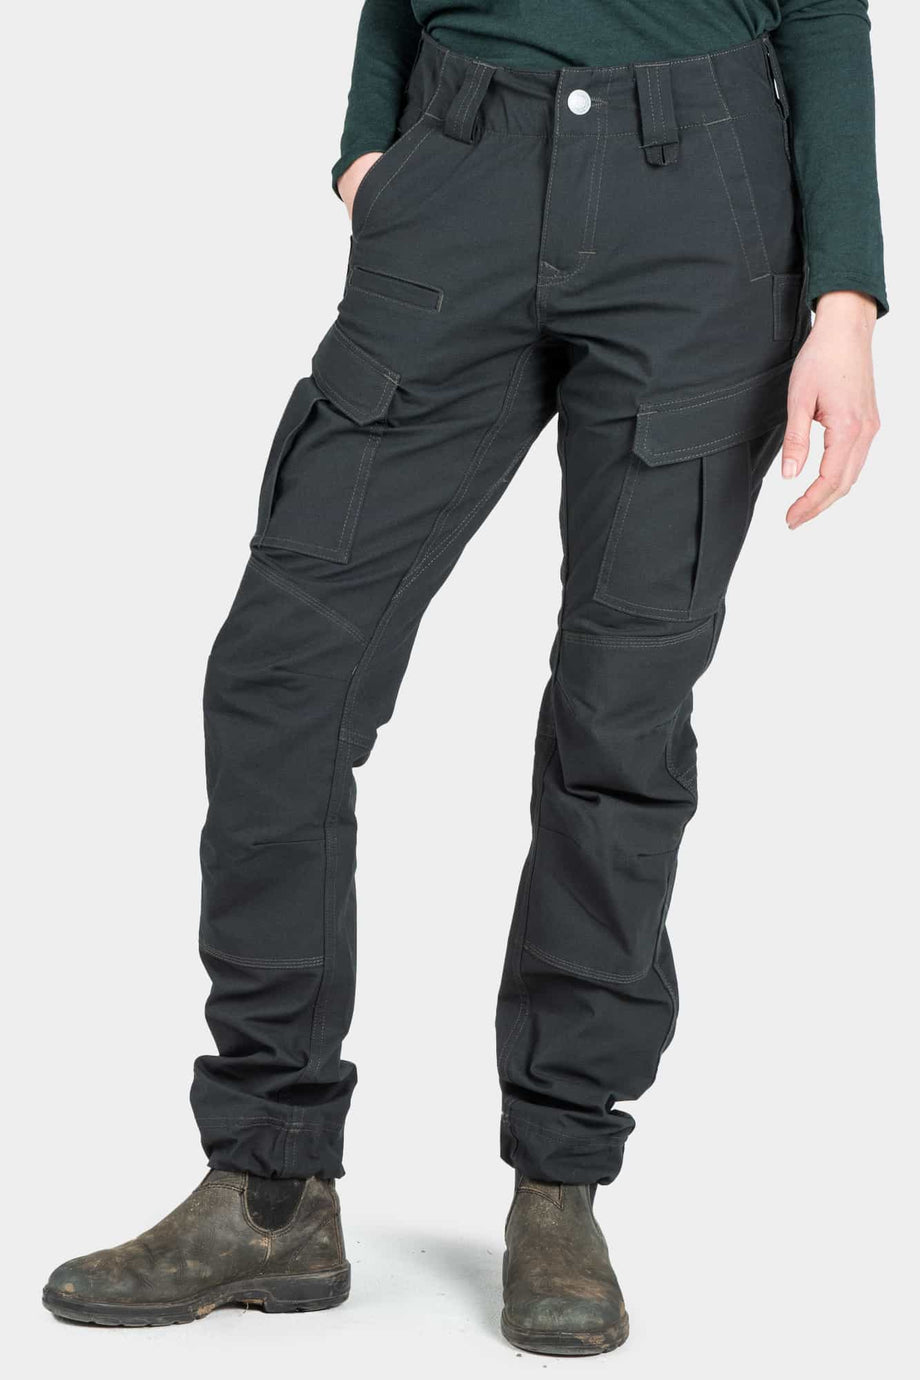 Dovetail Workwear Ready Set Cargo Pant - Women's Black Ripstop, 4x32